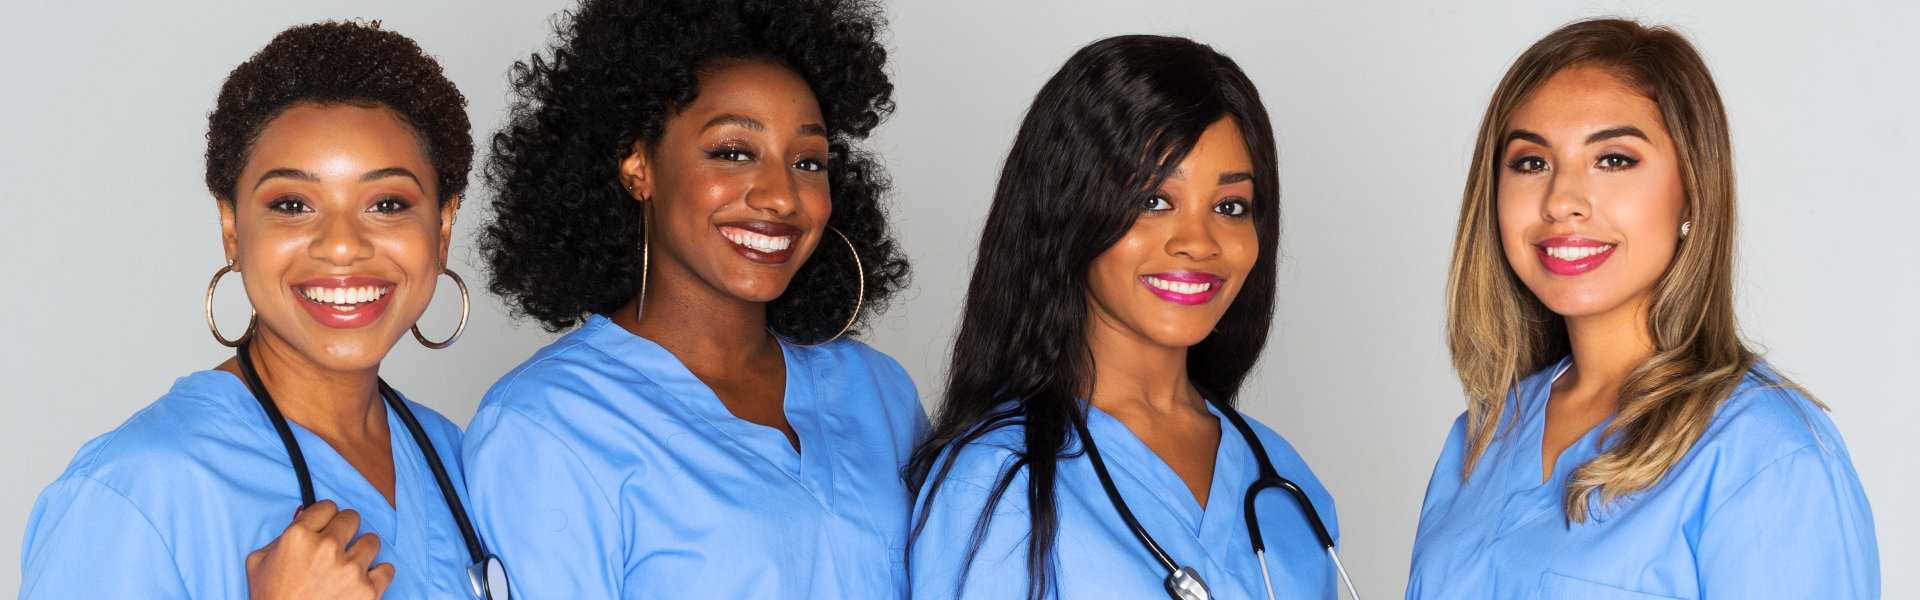 nurses smiling